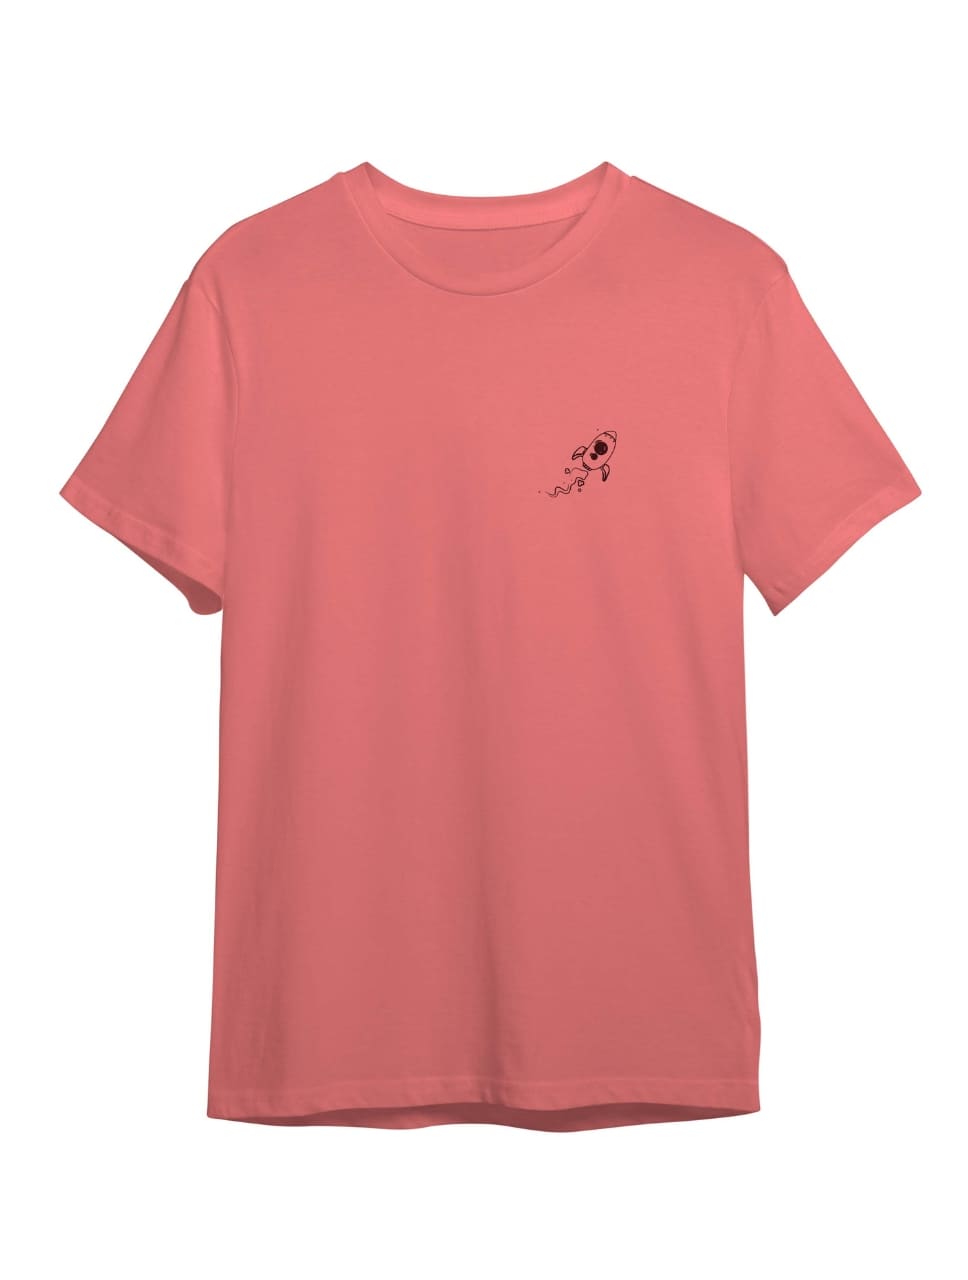 Camiseta Clásica para Hombre Salmón - Astronauta Salmón